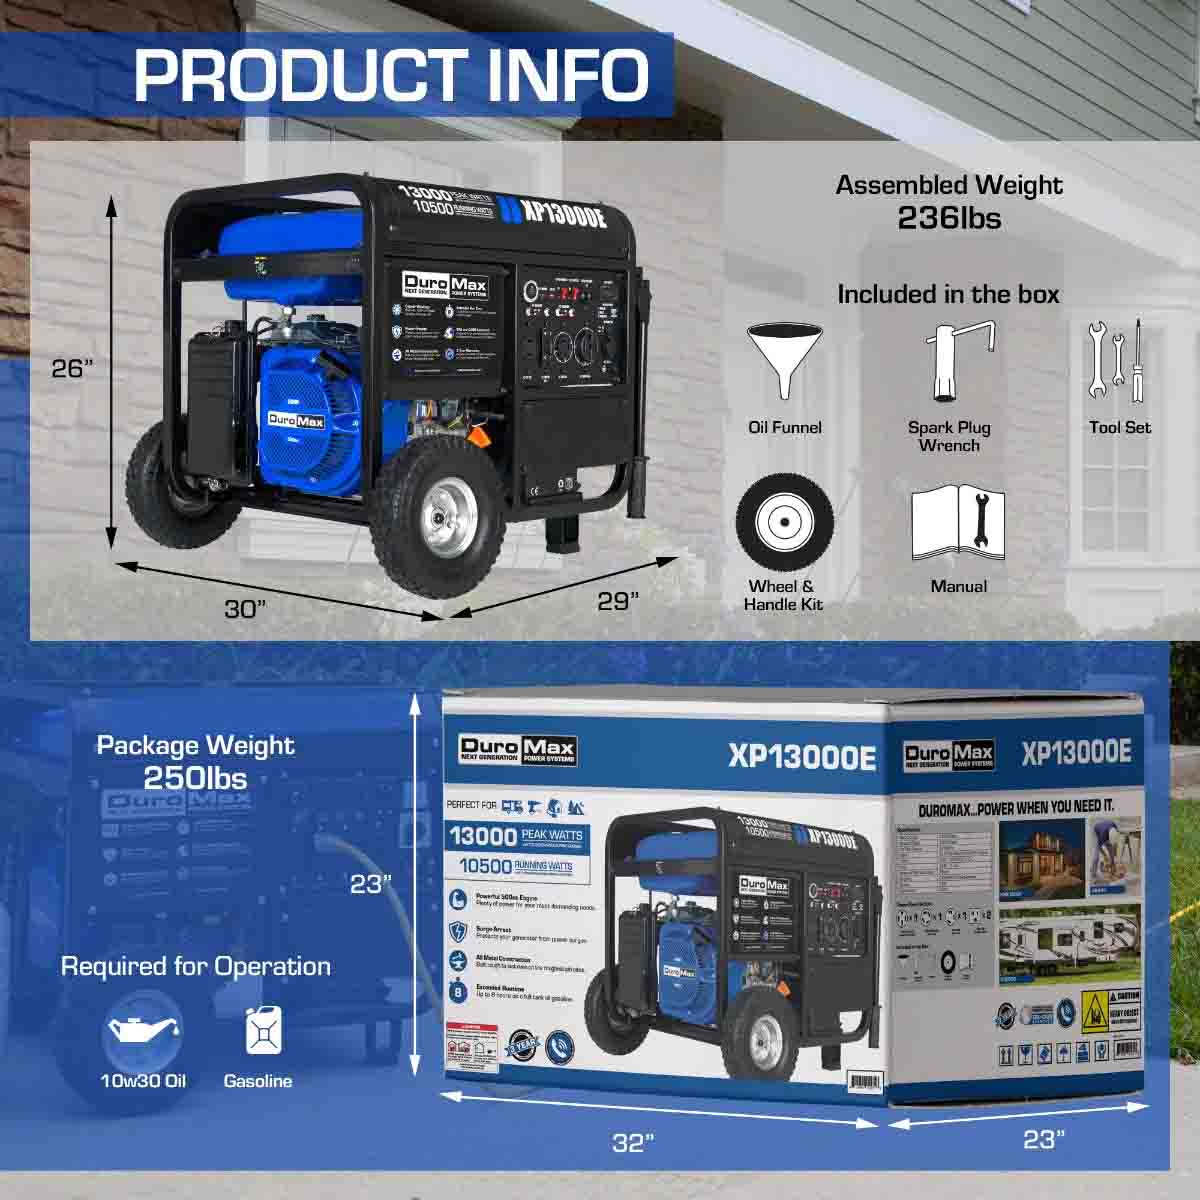 DuroMax XP13000E Gasoline Portable Generator Product Information